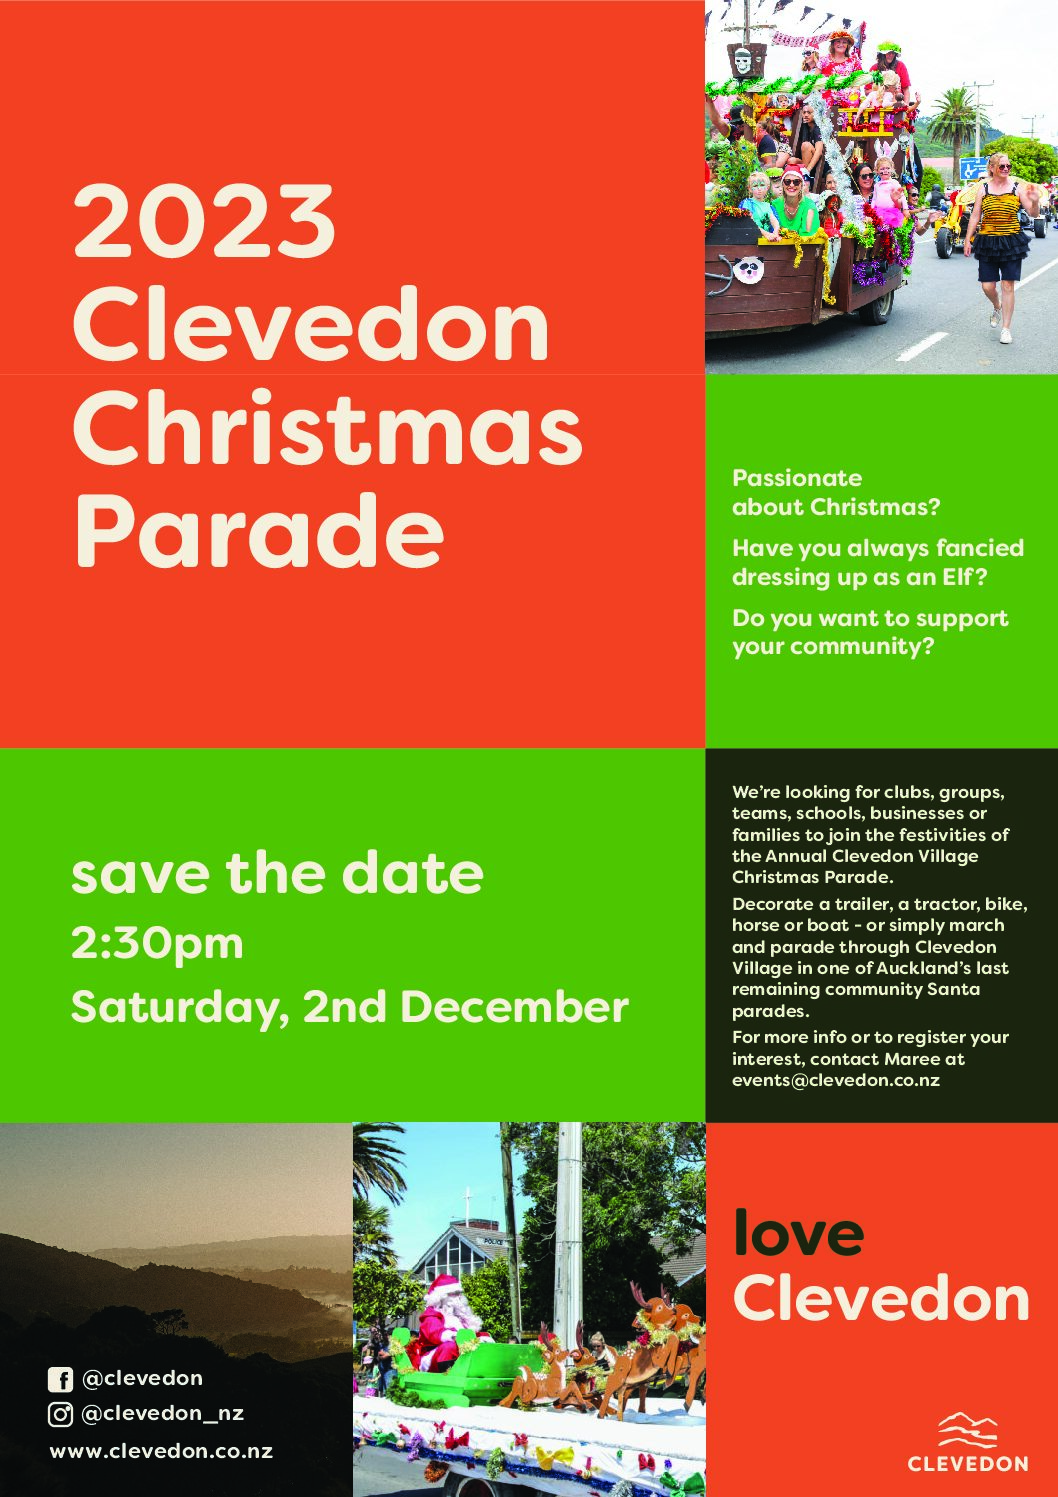 2023 Clevedon Christmas Parade